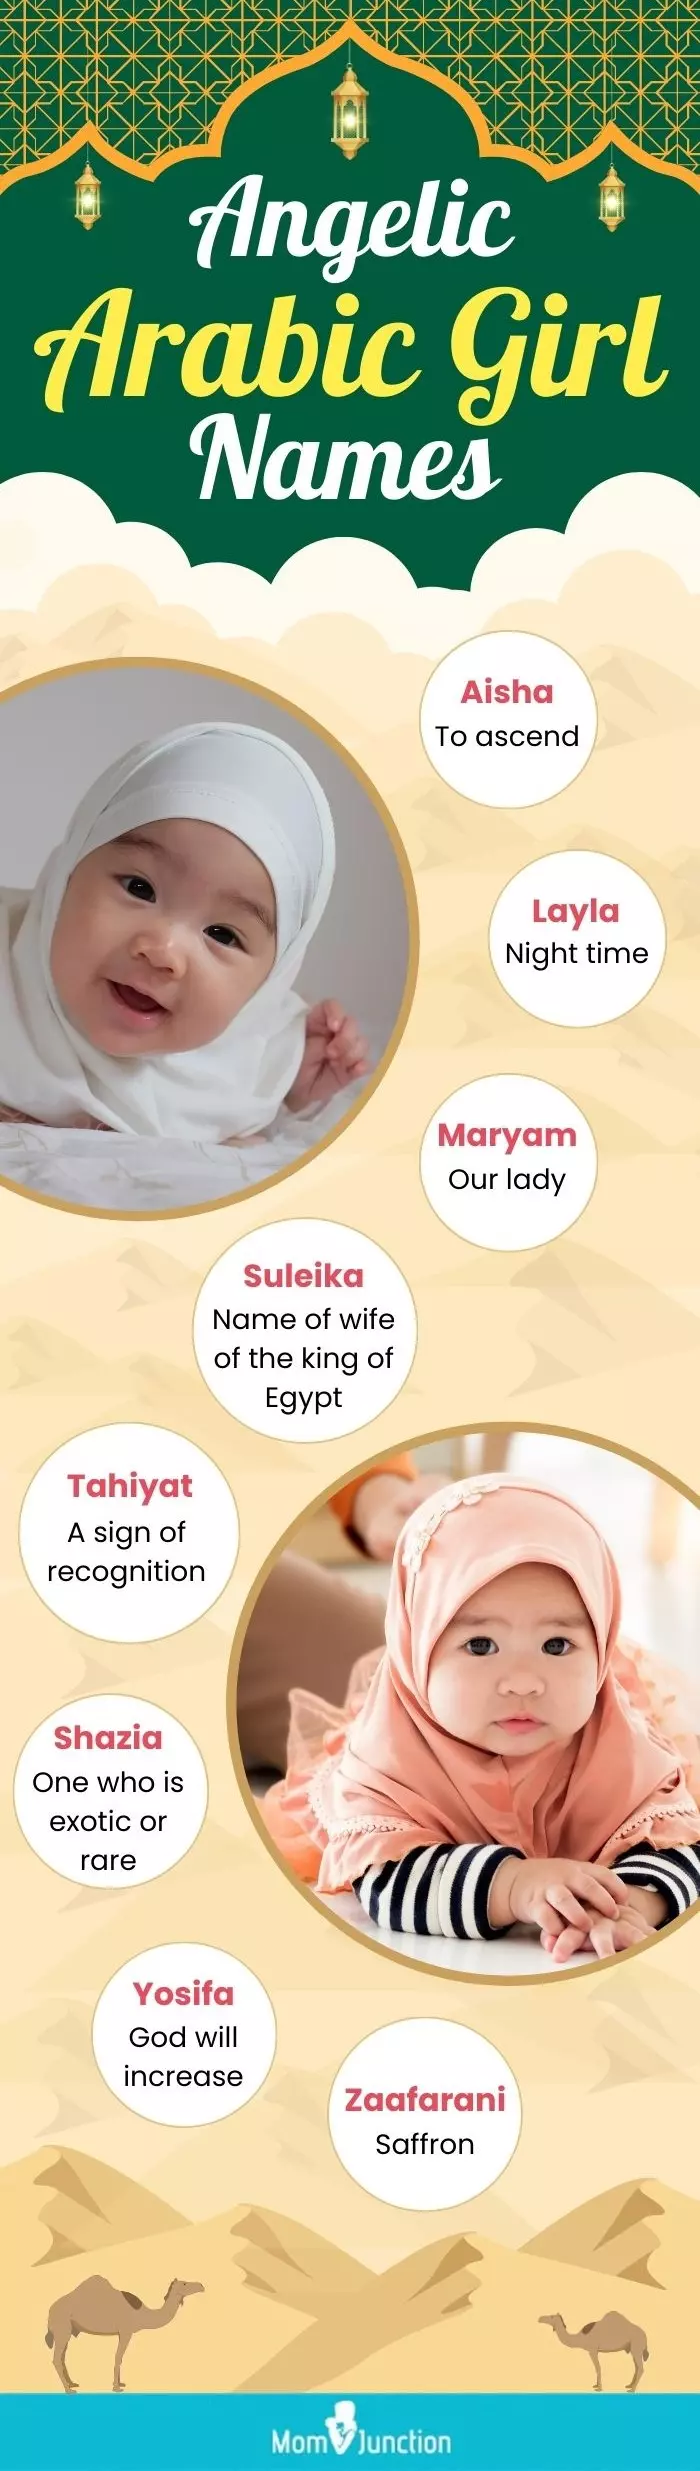 angelic arabic girl names (infographic)